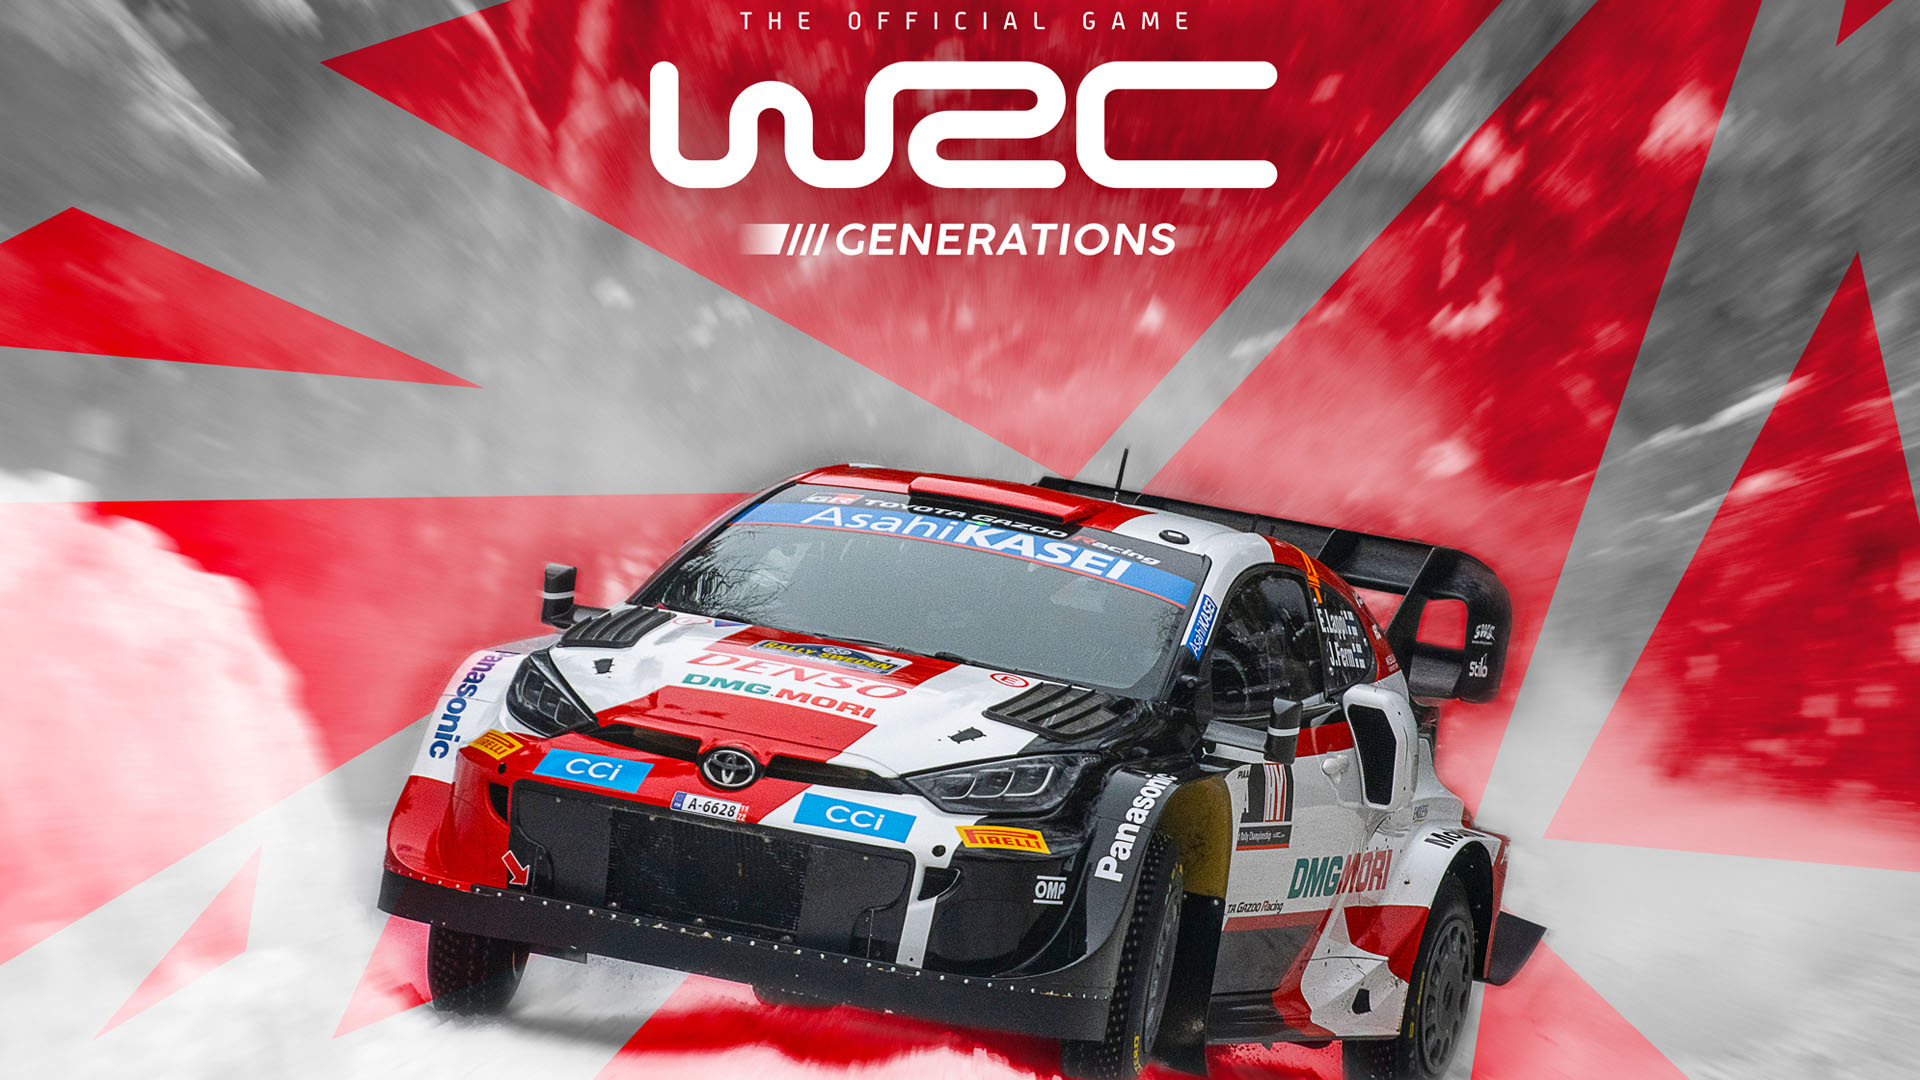 More information about "La recensione di WRC Generations, nuovo FIA WRC Official Game"